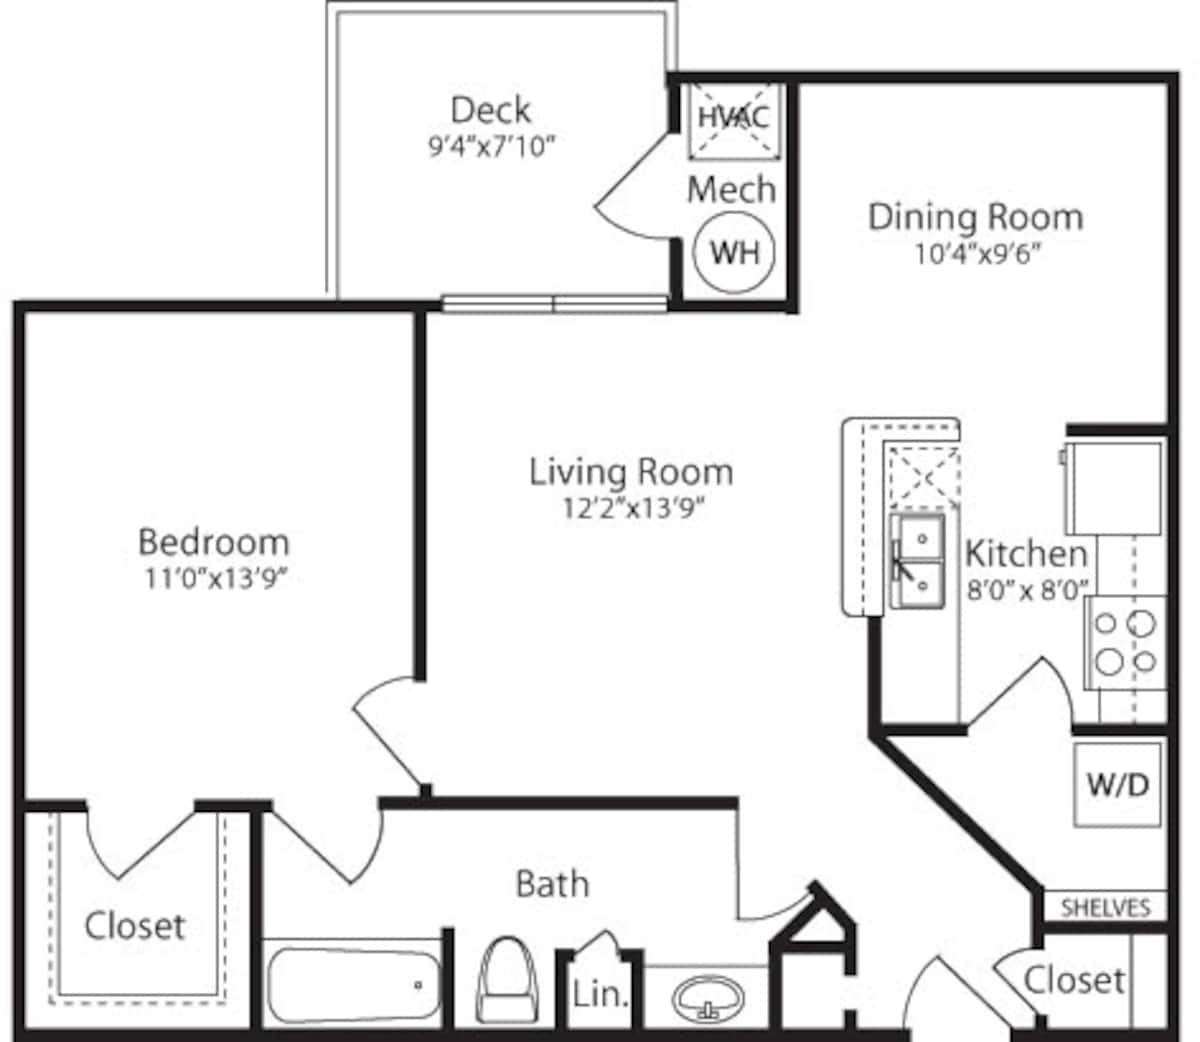 Floorplan diagram for The Crest, showing 1 bedroom